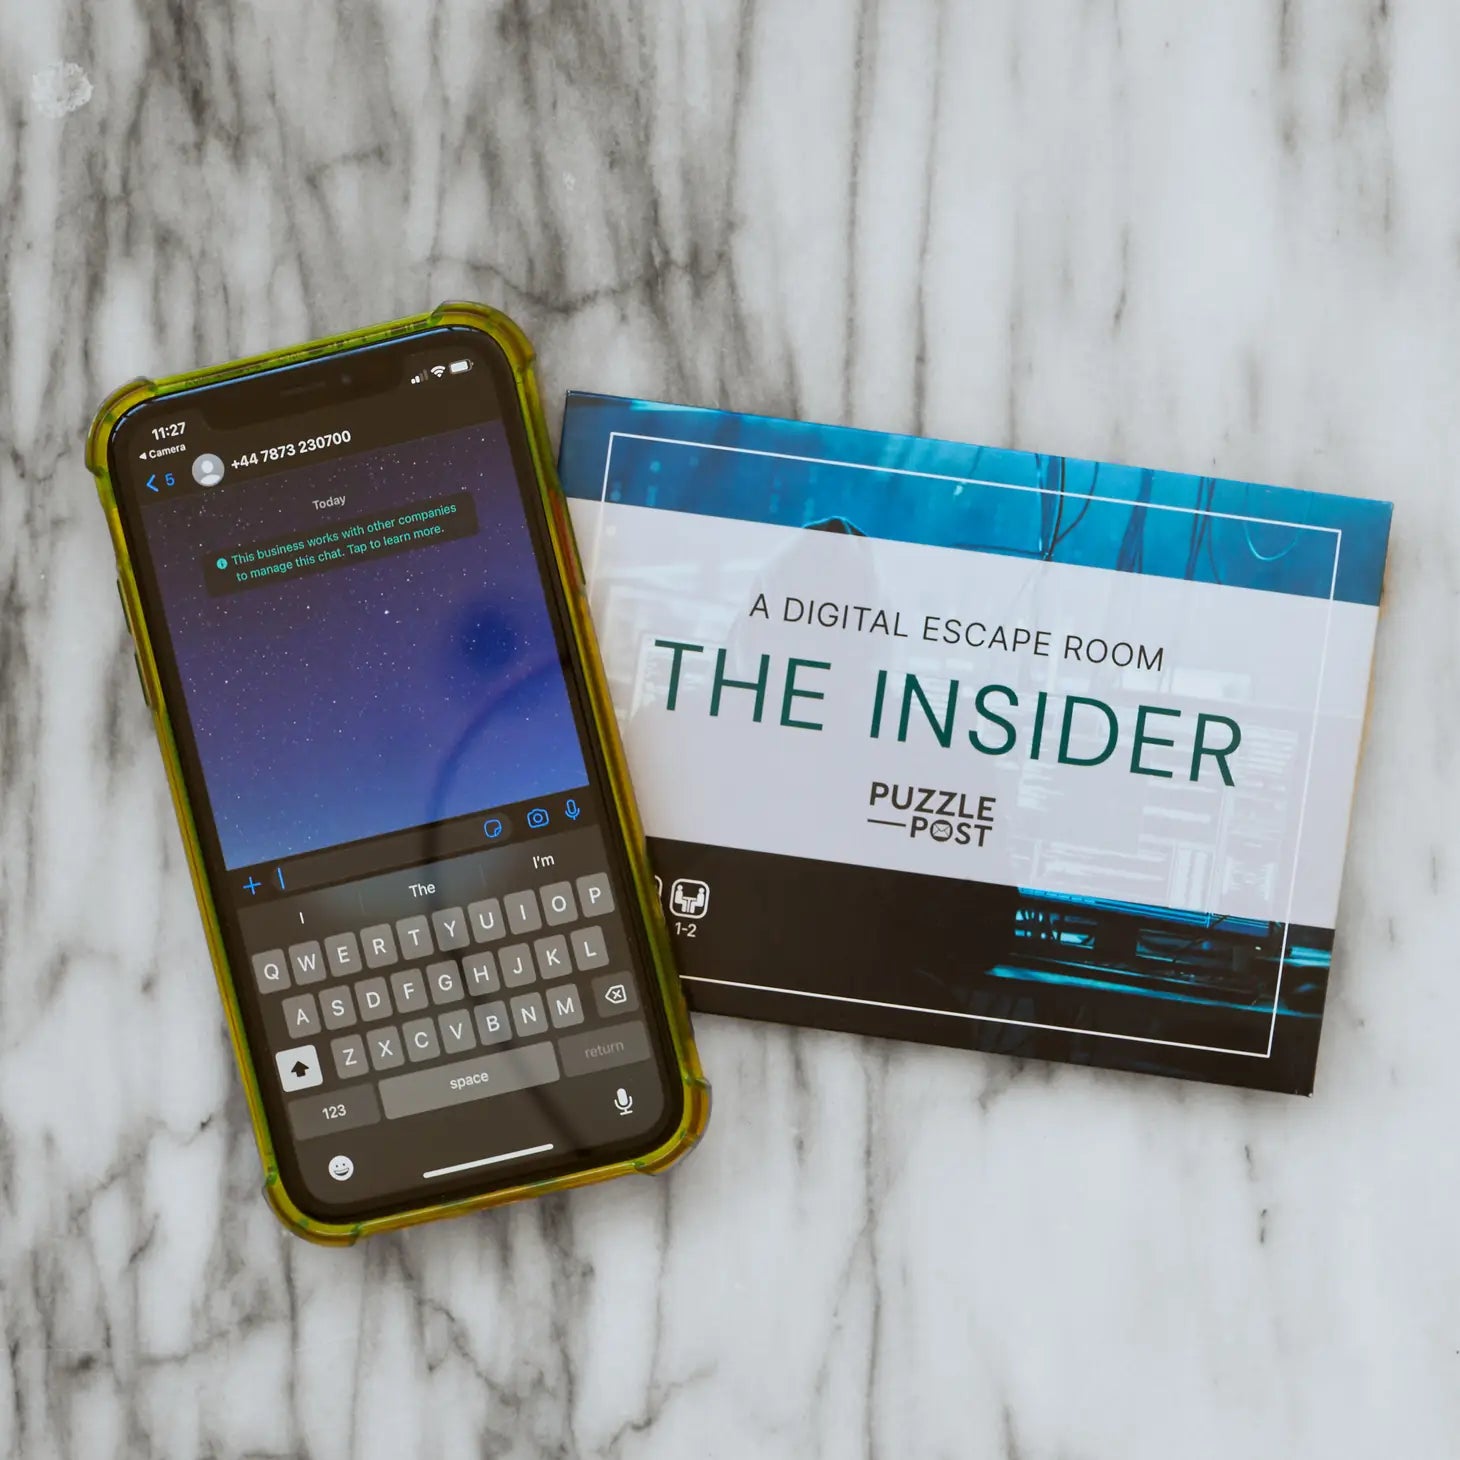 THE INSIDER - A Digital Escape Room